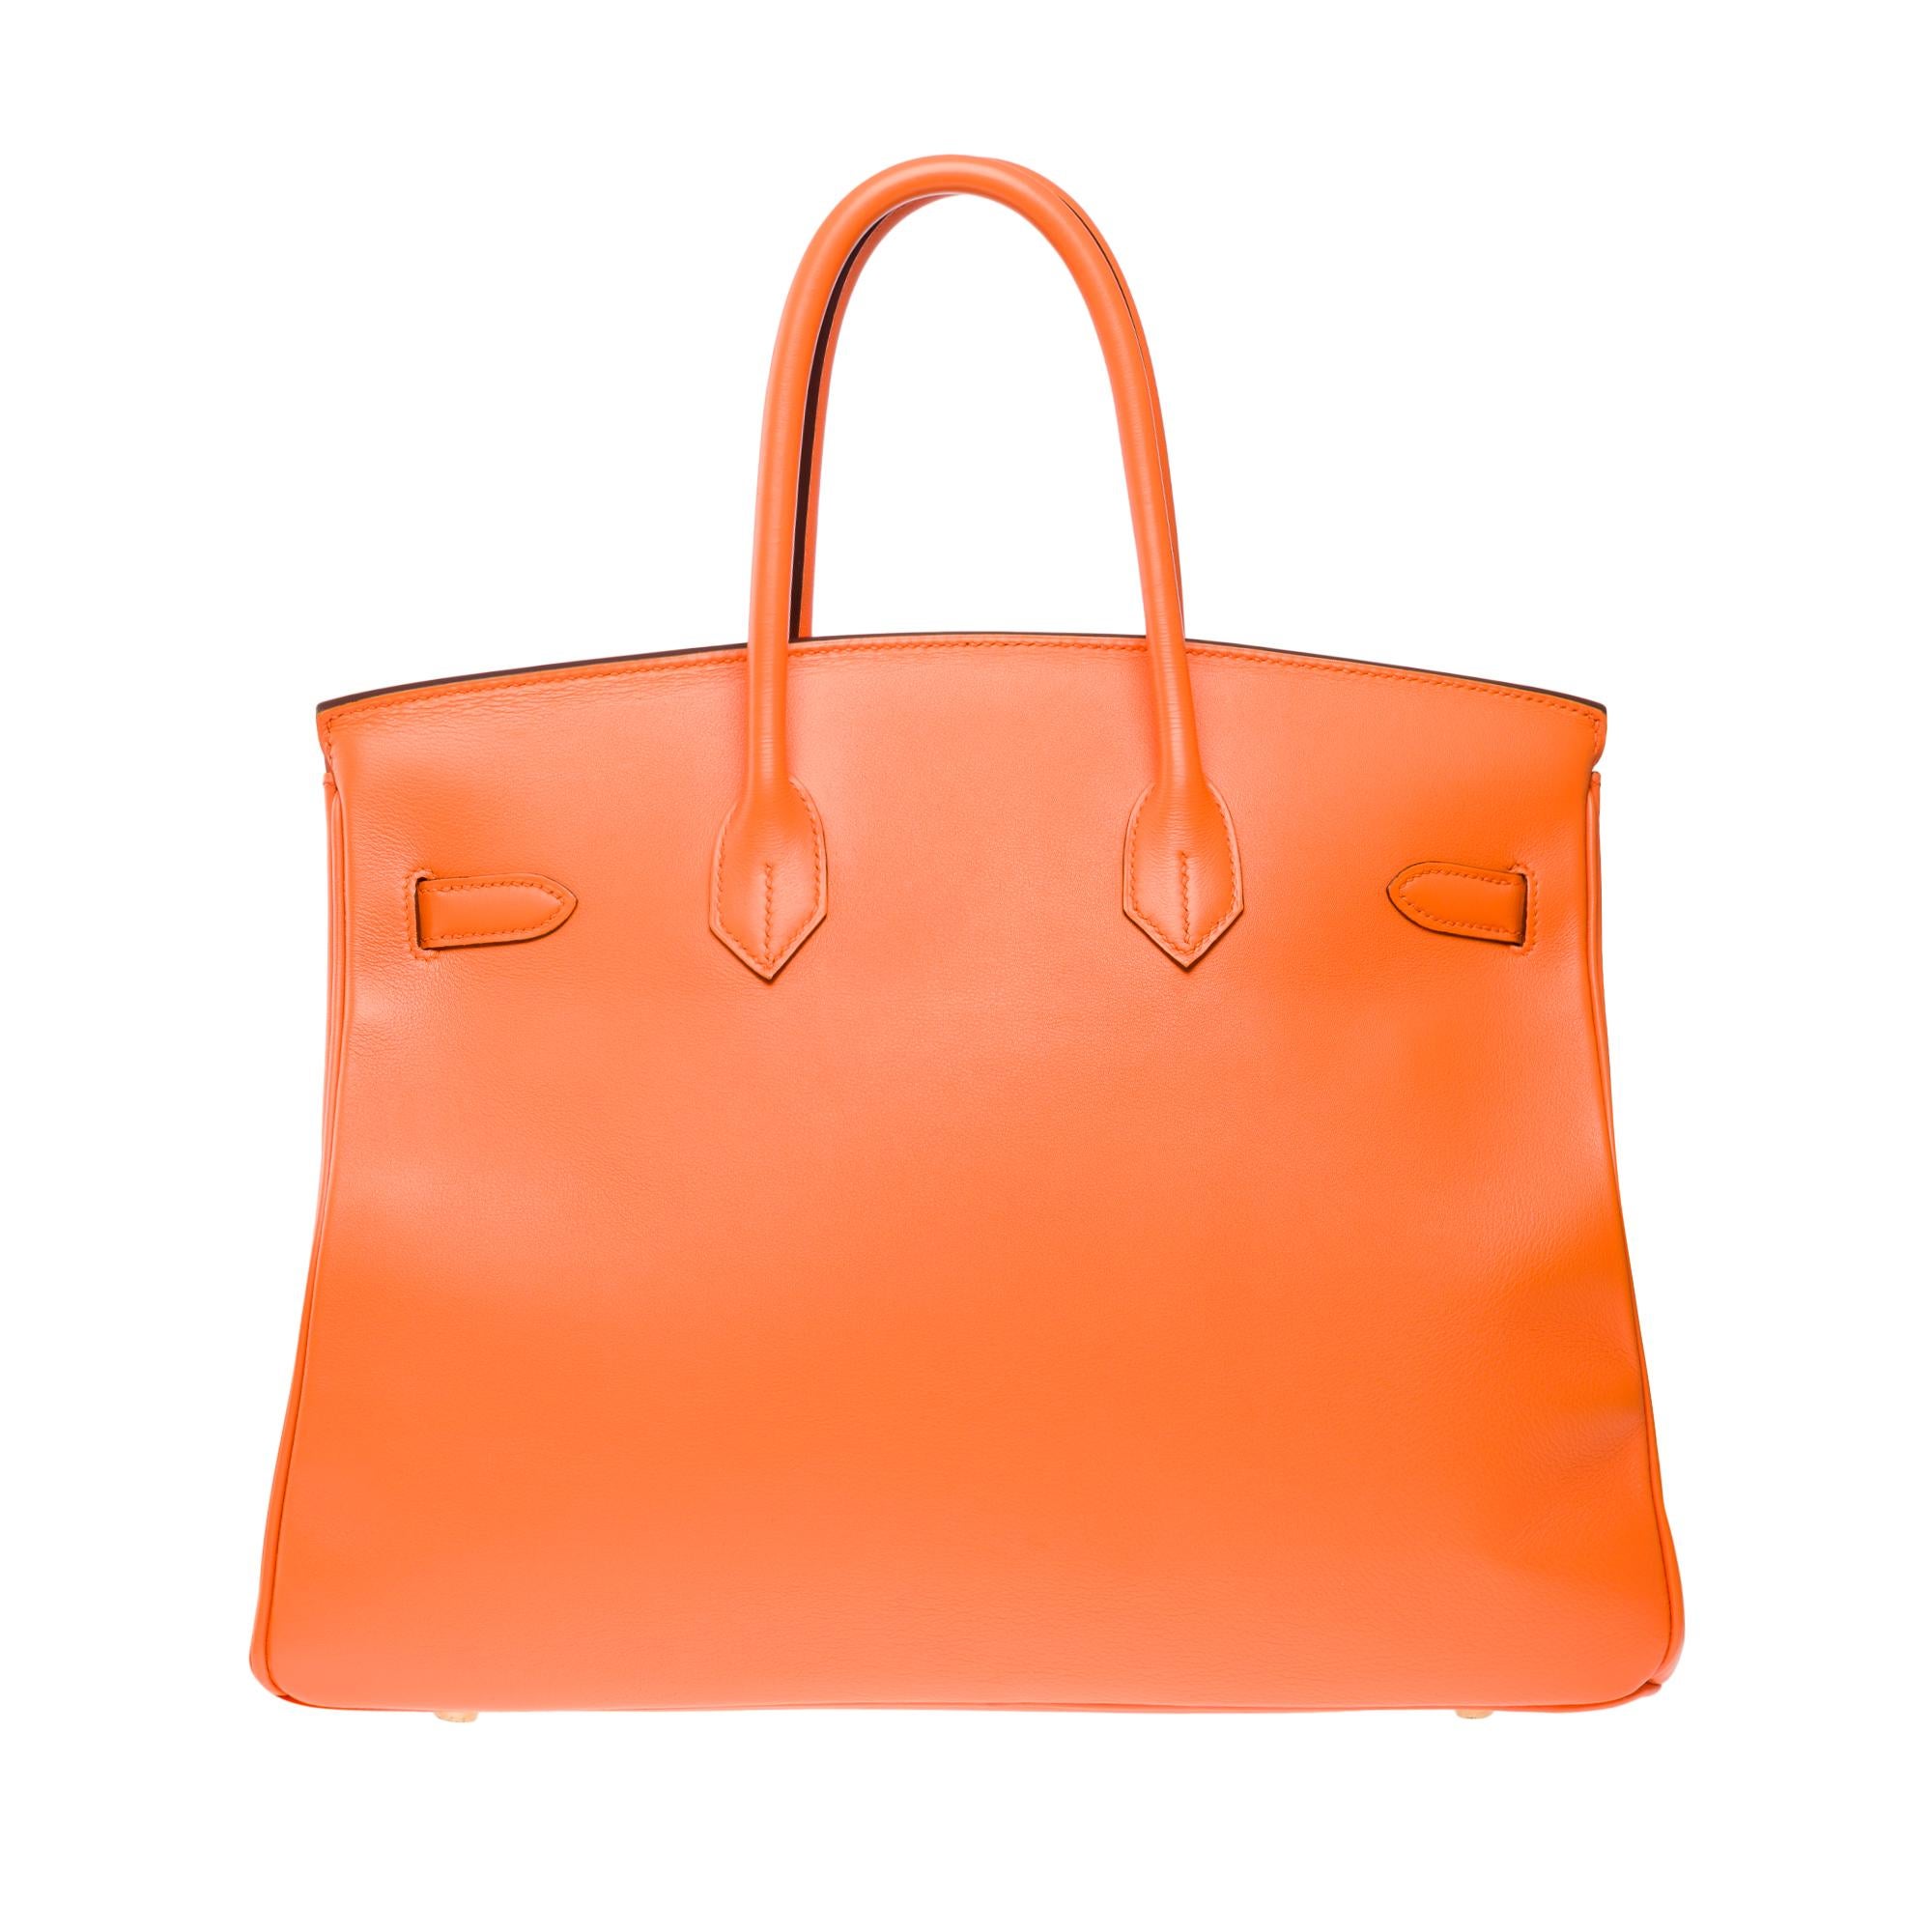 Women's or Men's Amazing Hermès Birkin 35 handbag in Orange Swift Calf leather, GHW